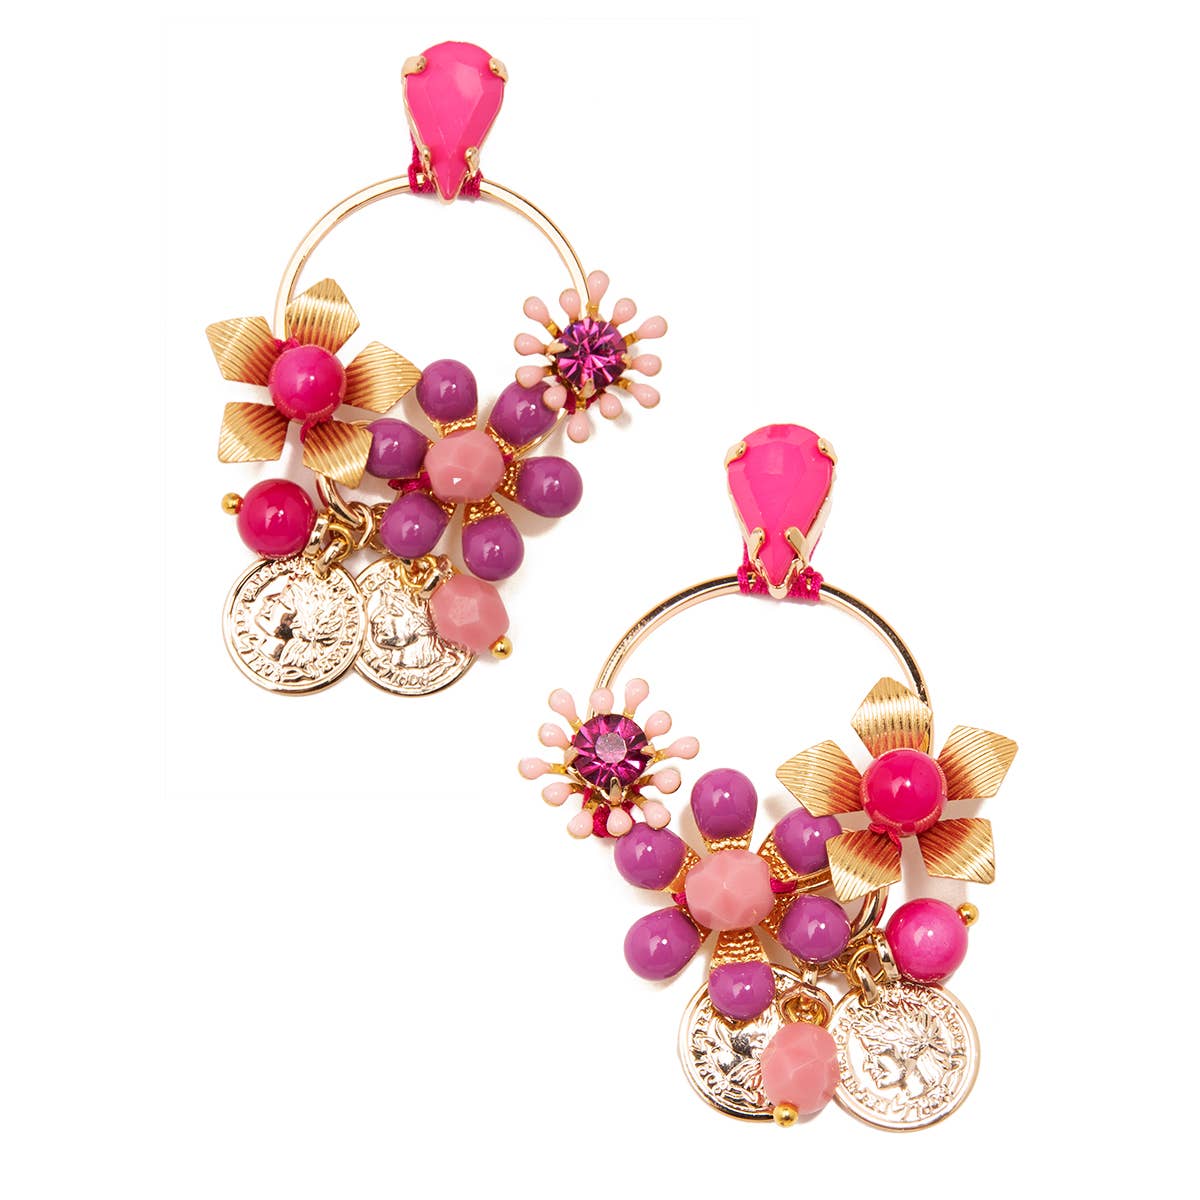 Shades of Pink Handmade Flower & Crystal Drop Earring